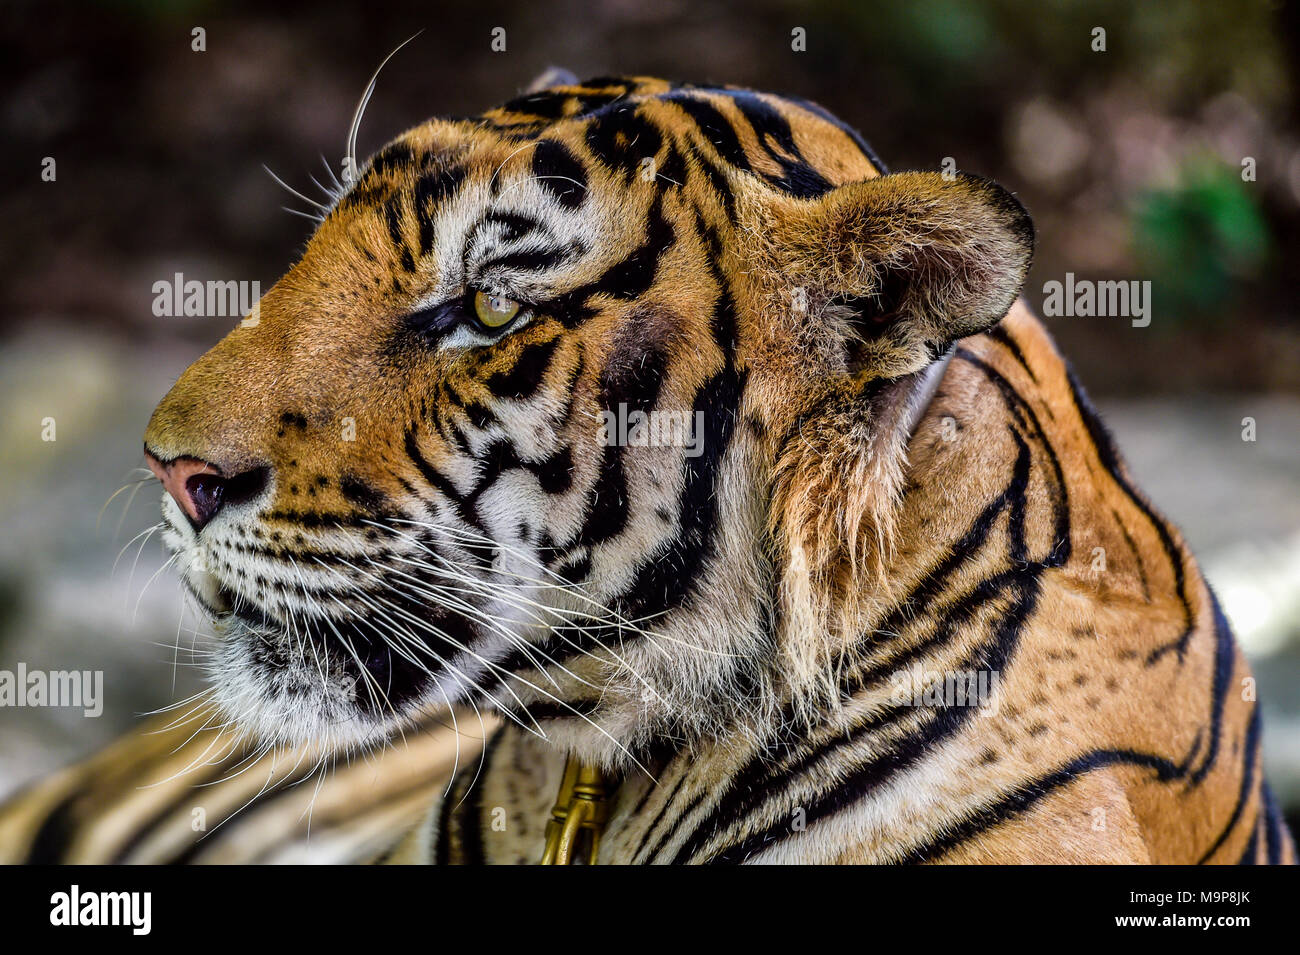 Tiger (Panthera tigris), captive, animal portrait, Pattaya, Thailand Stock Photo